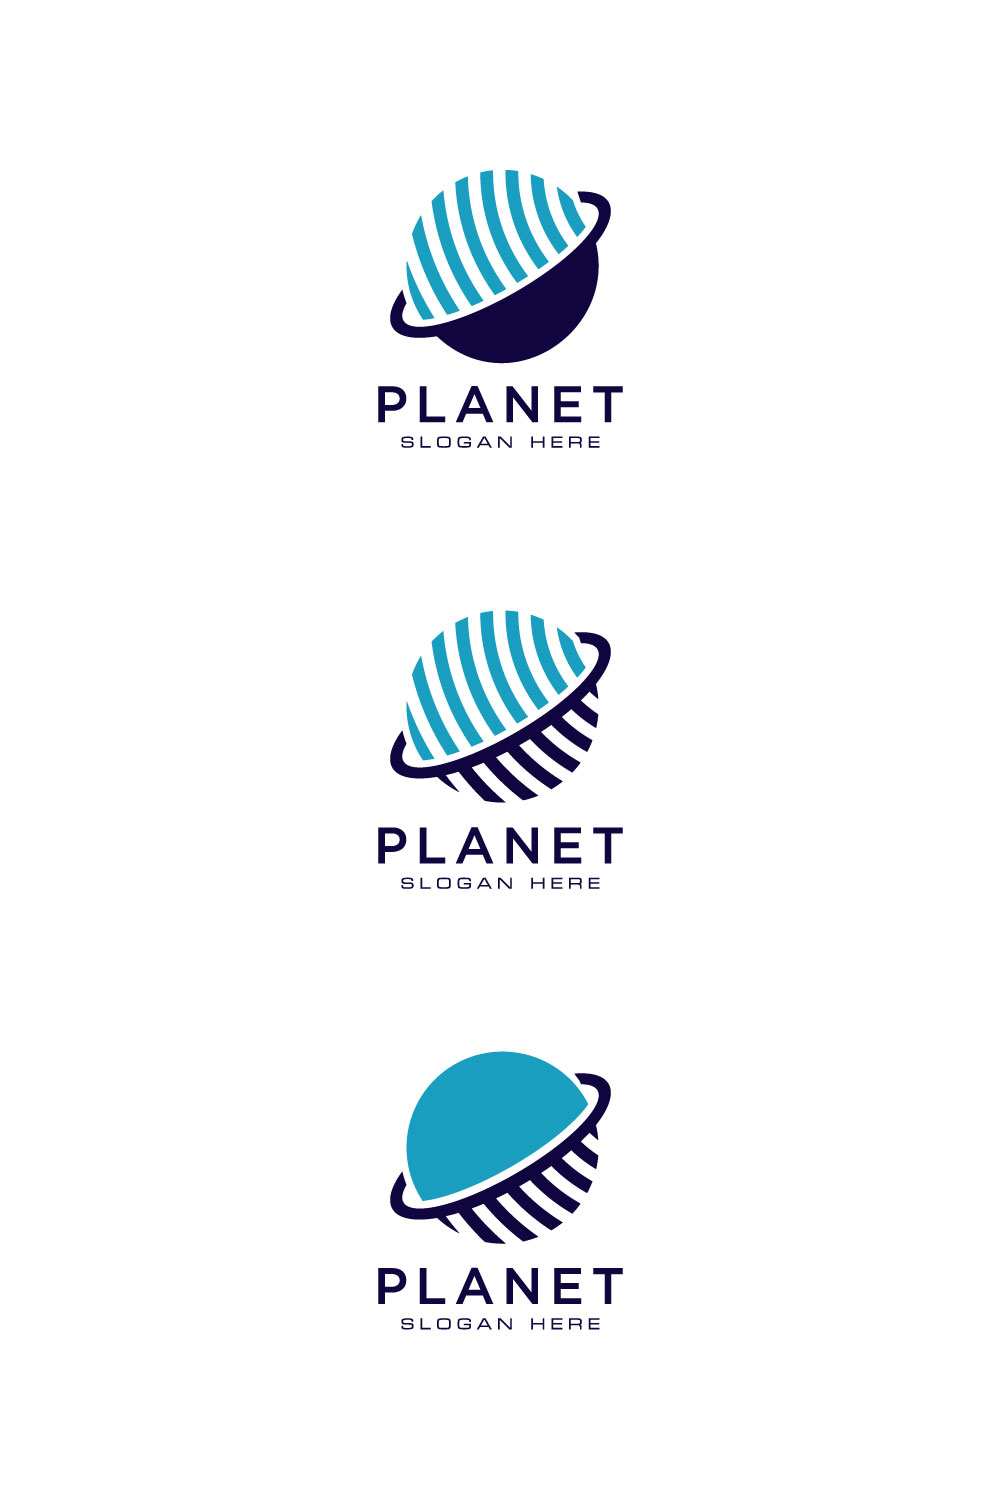 Creative Planet Orbit Abstract Logo Design pinterest.